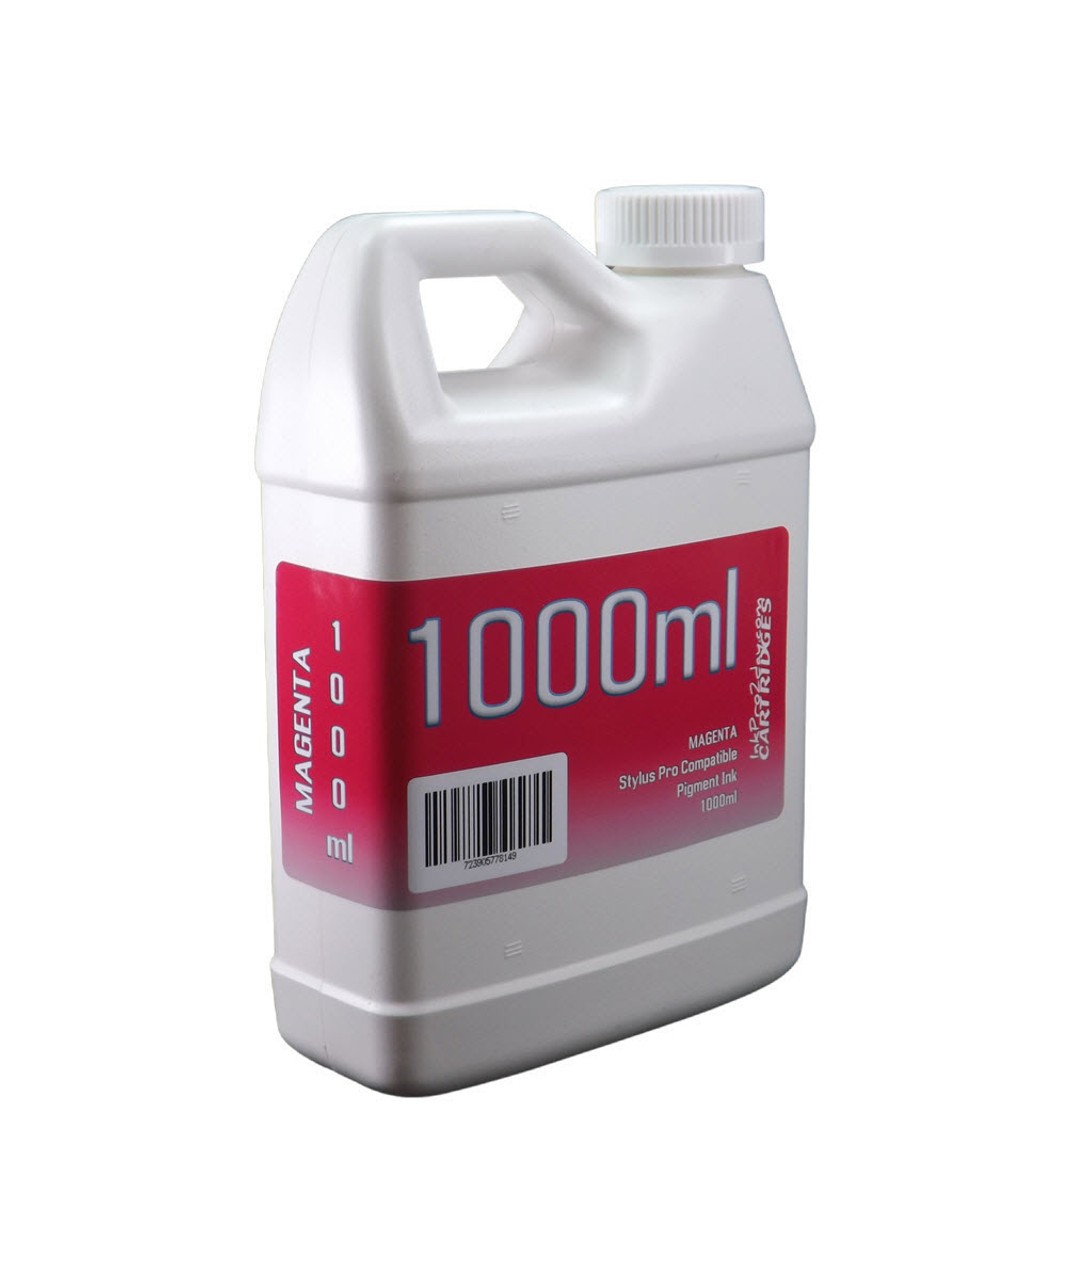 Magenta 1000ml bottle compatible Pigment Ink for Epson SureColor T3000 T5000 T7000 Printers